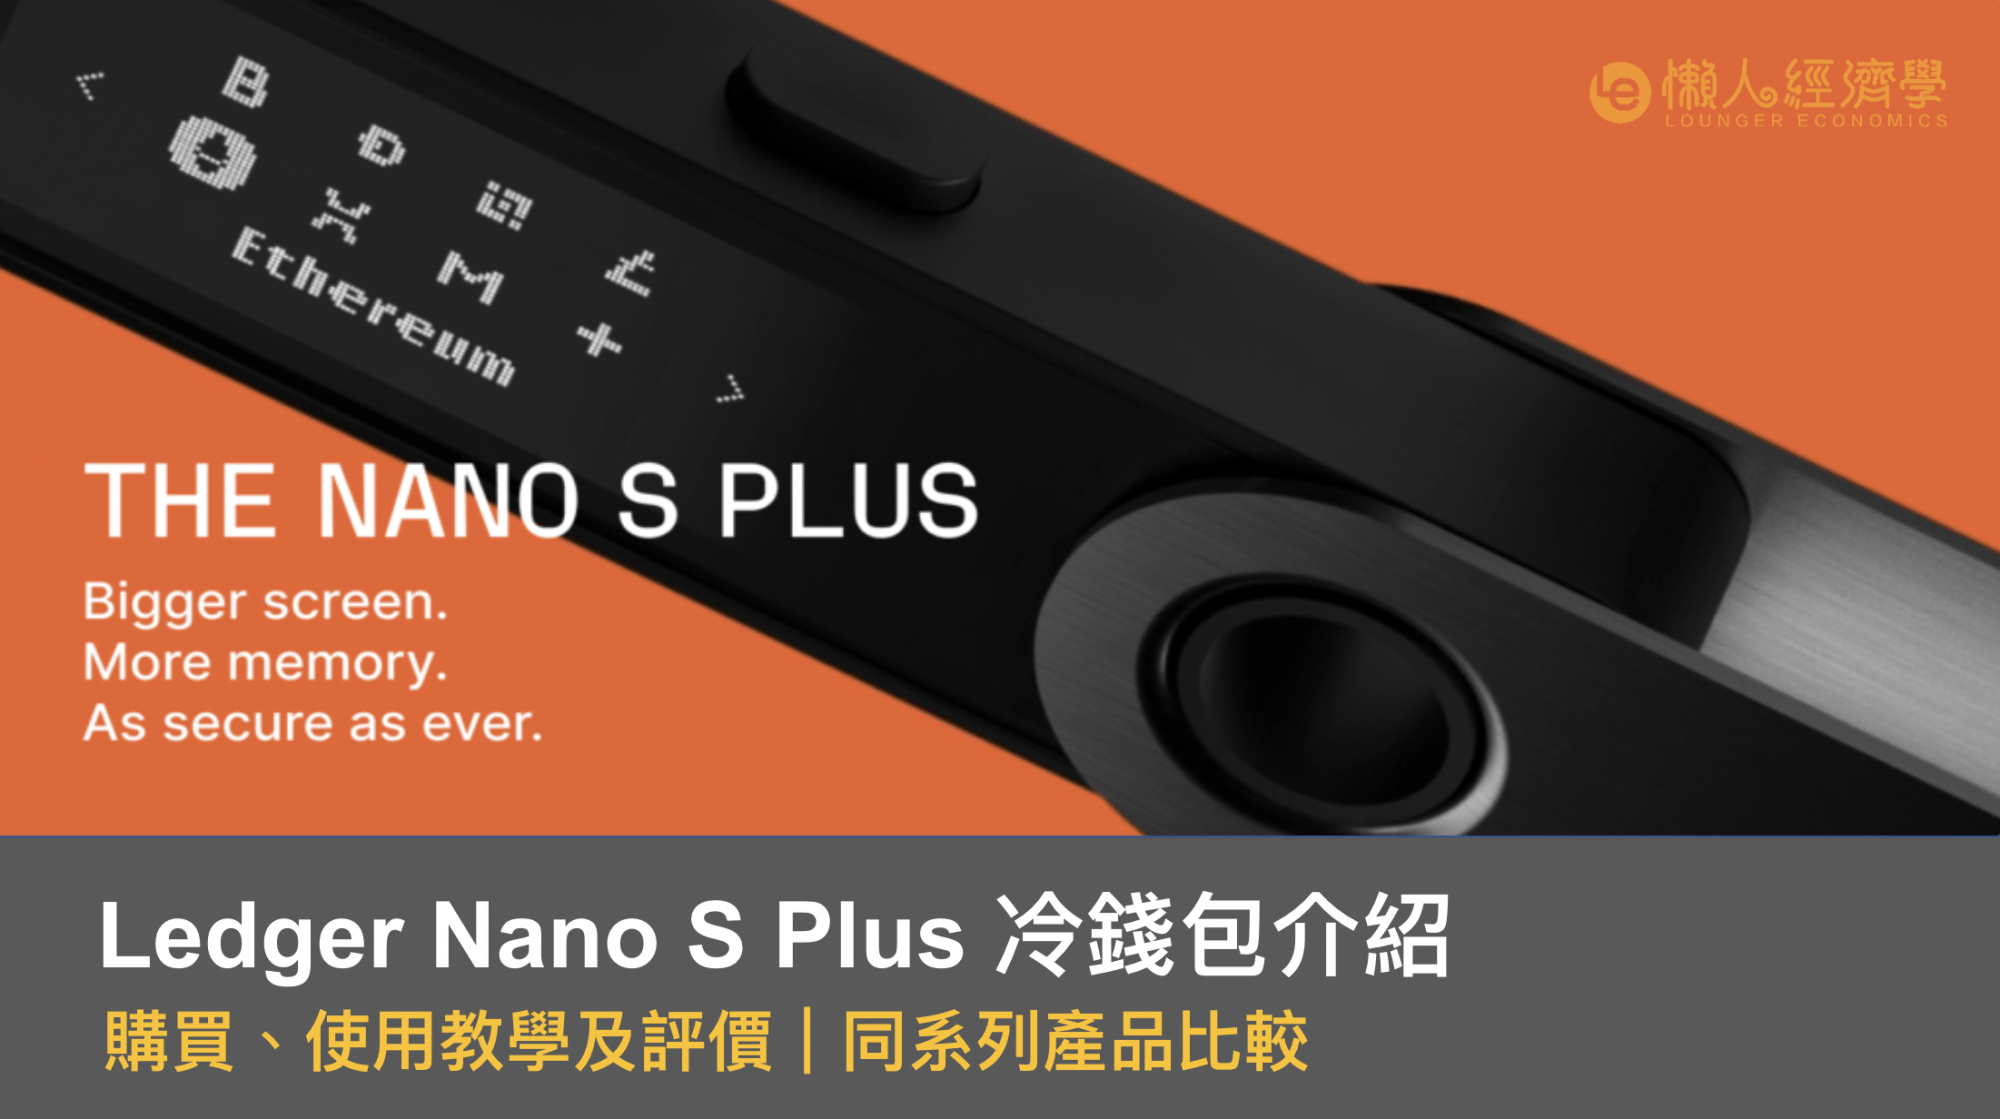 Ledger Nano S Plus 冷錢包介紹｜購買、使用教學及評價｜同系列產品比較